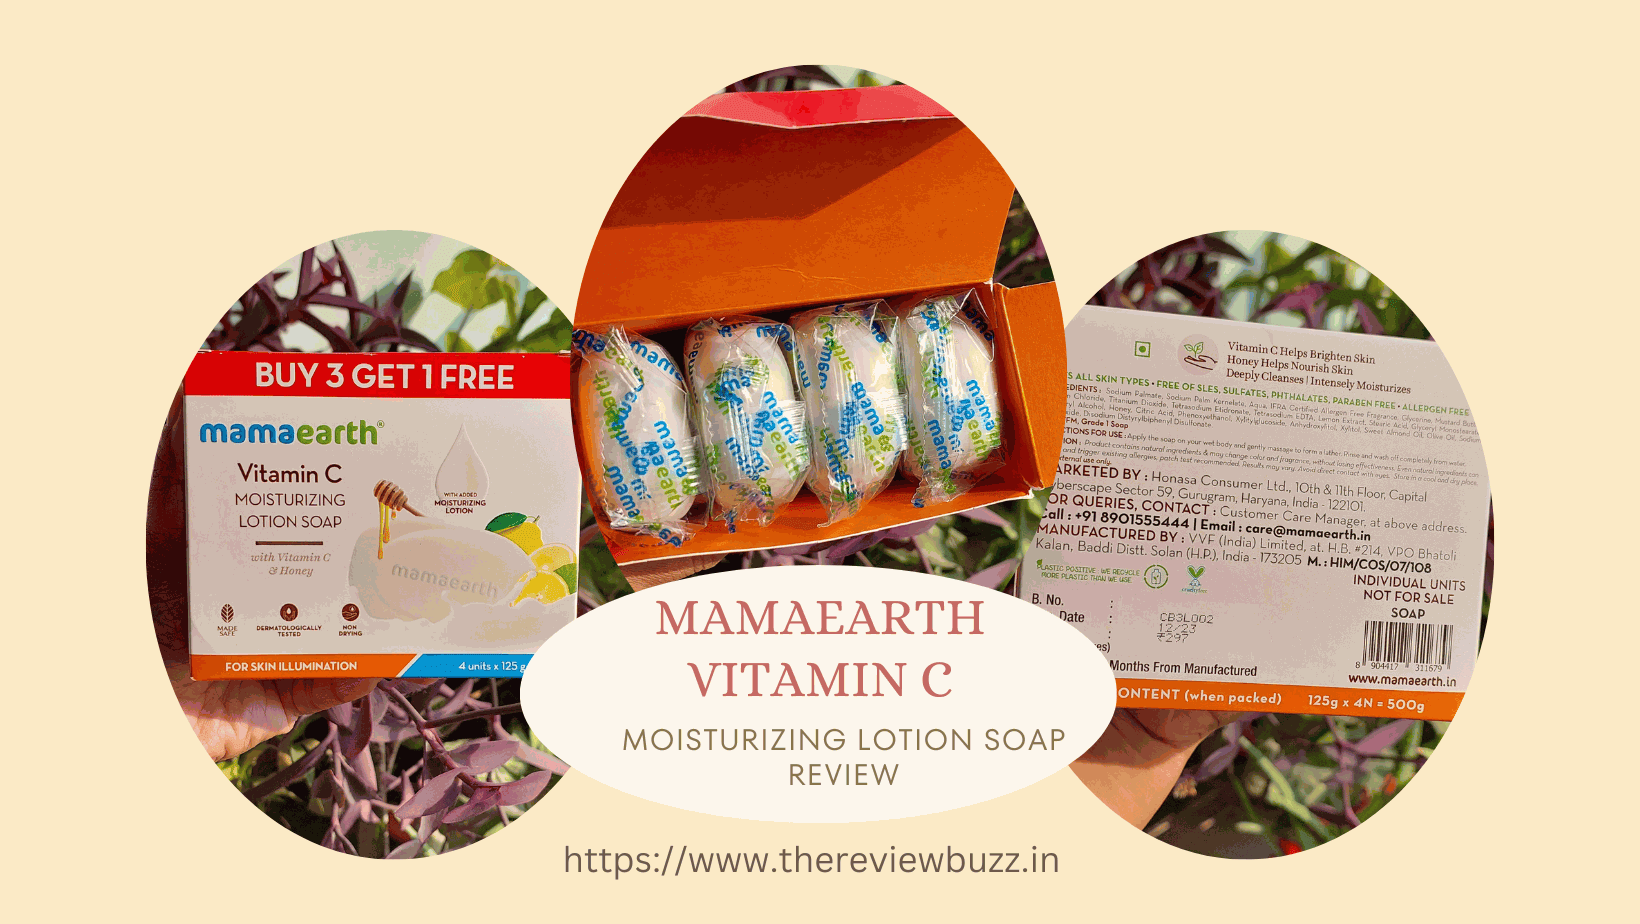 Mamaearth Vitamin C Moisturizing Lotion Soap